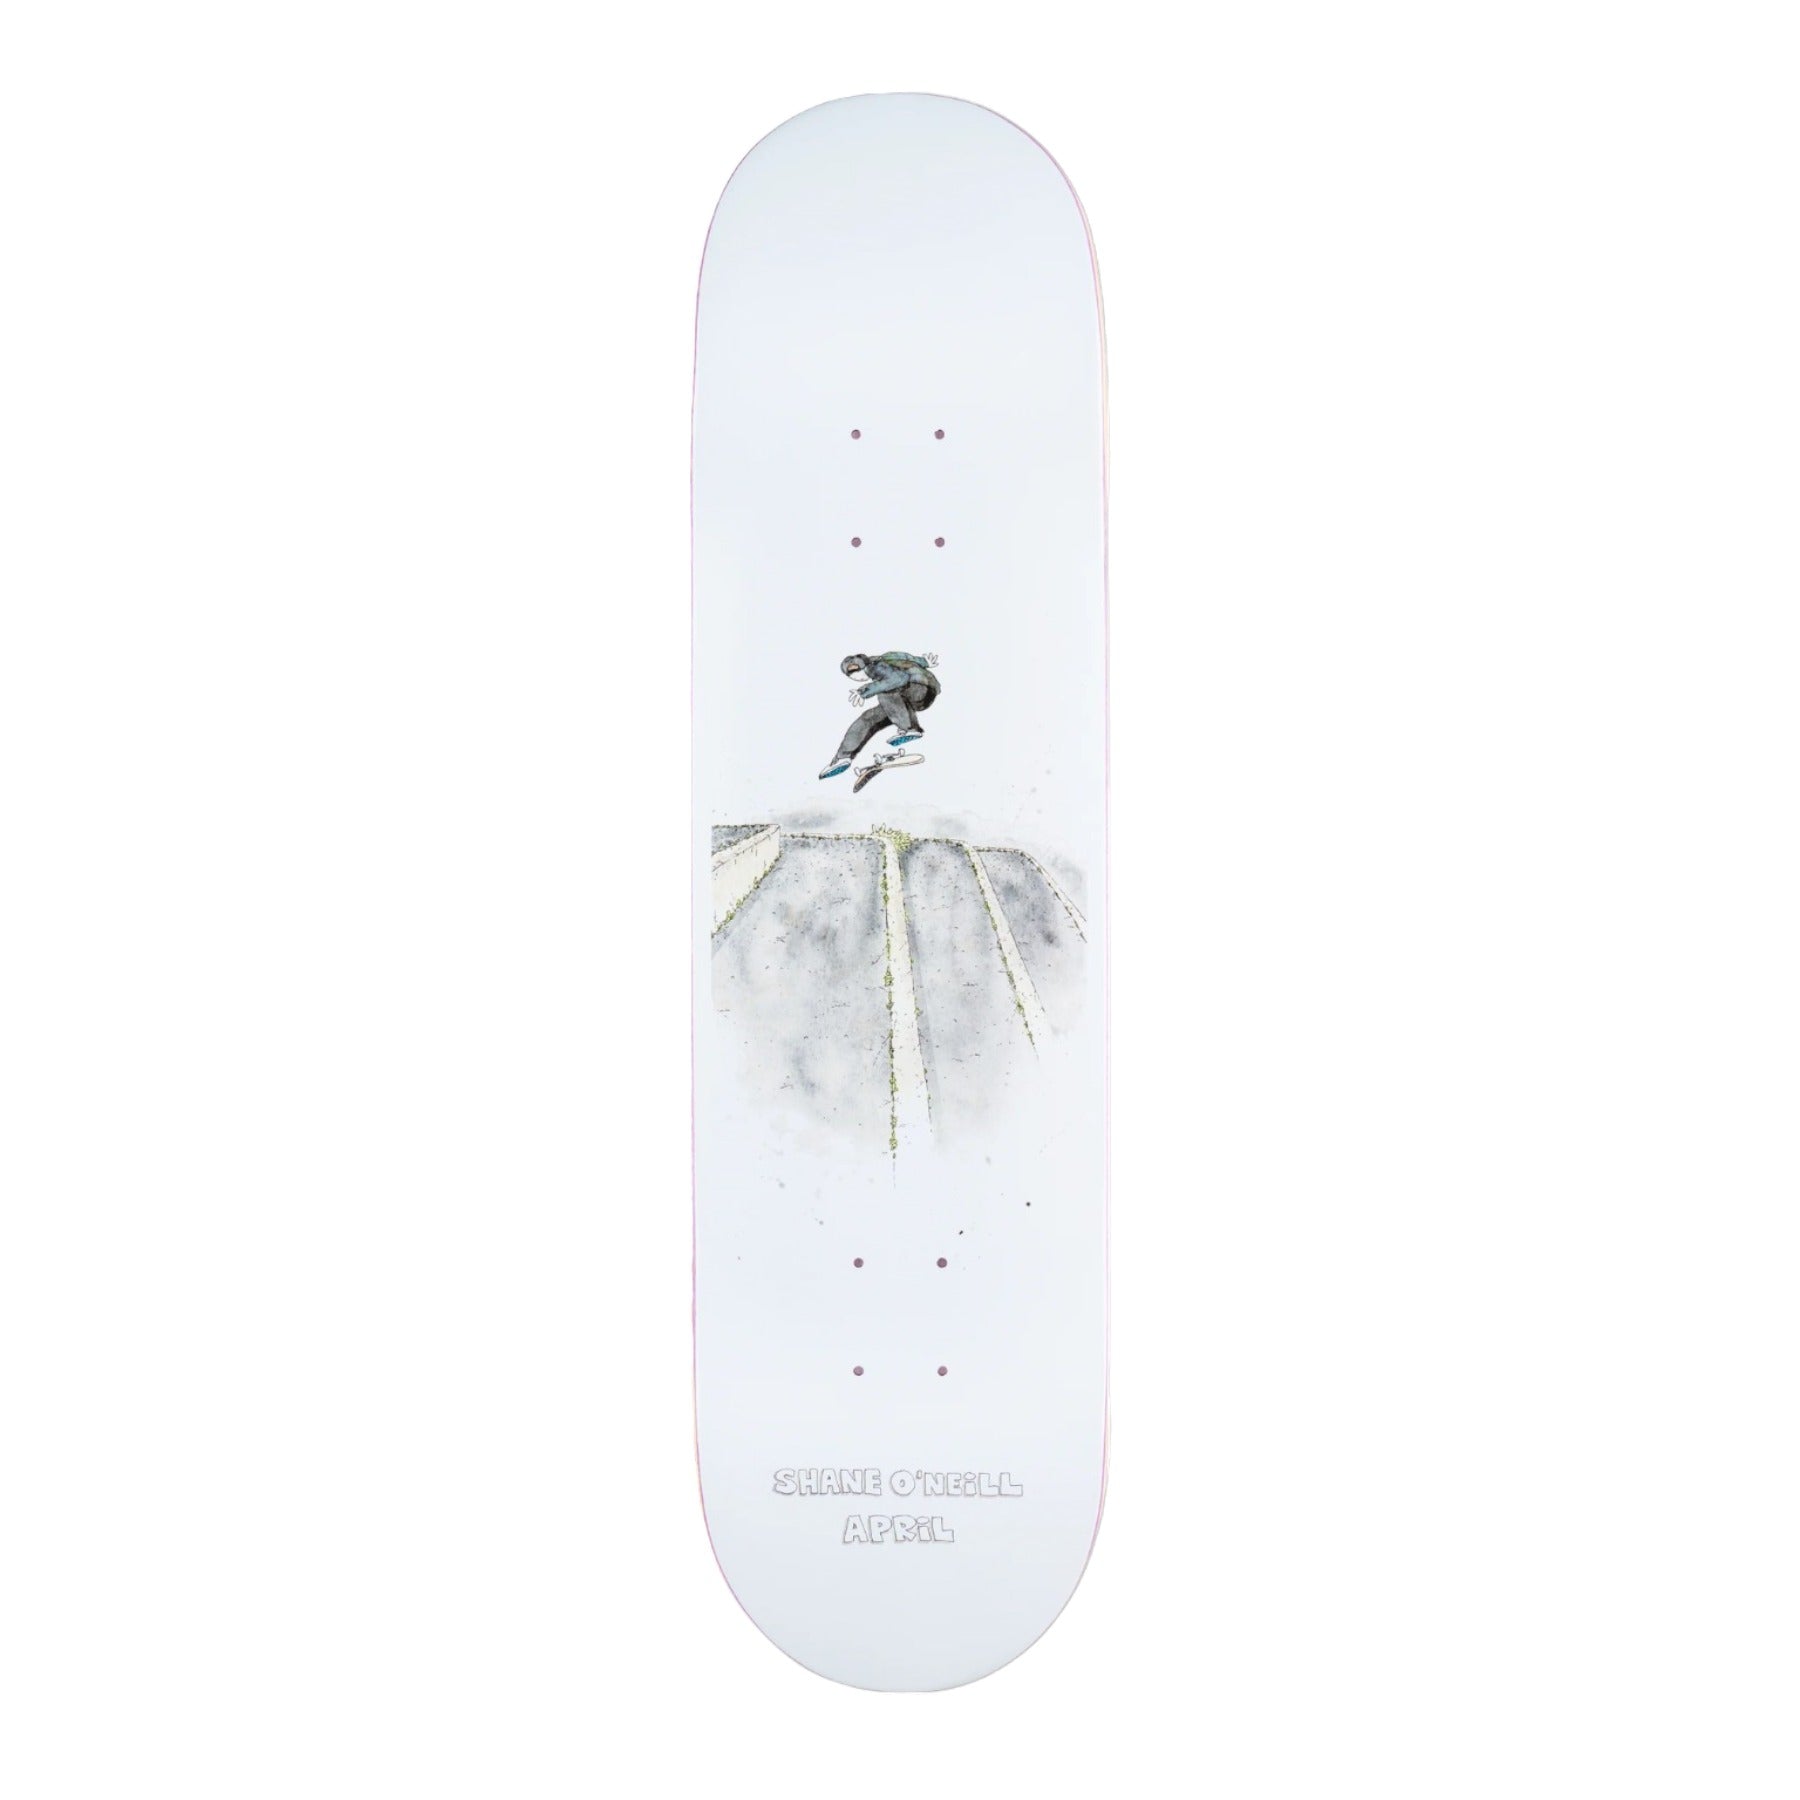 April Shane O'Neill Wallenberg Skateboard Deck - 8.125